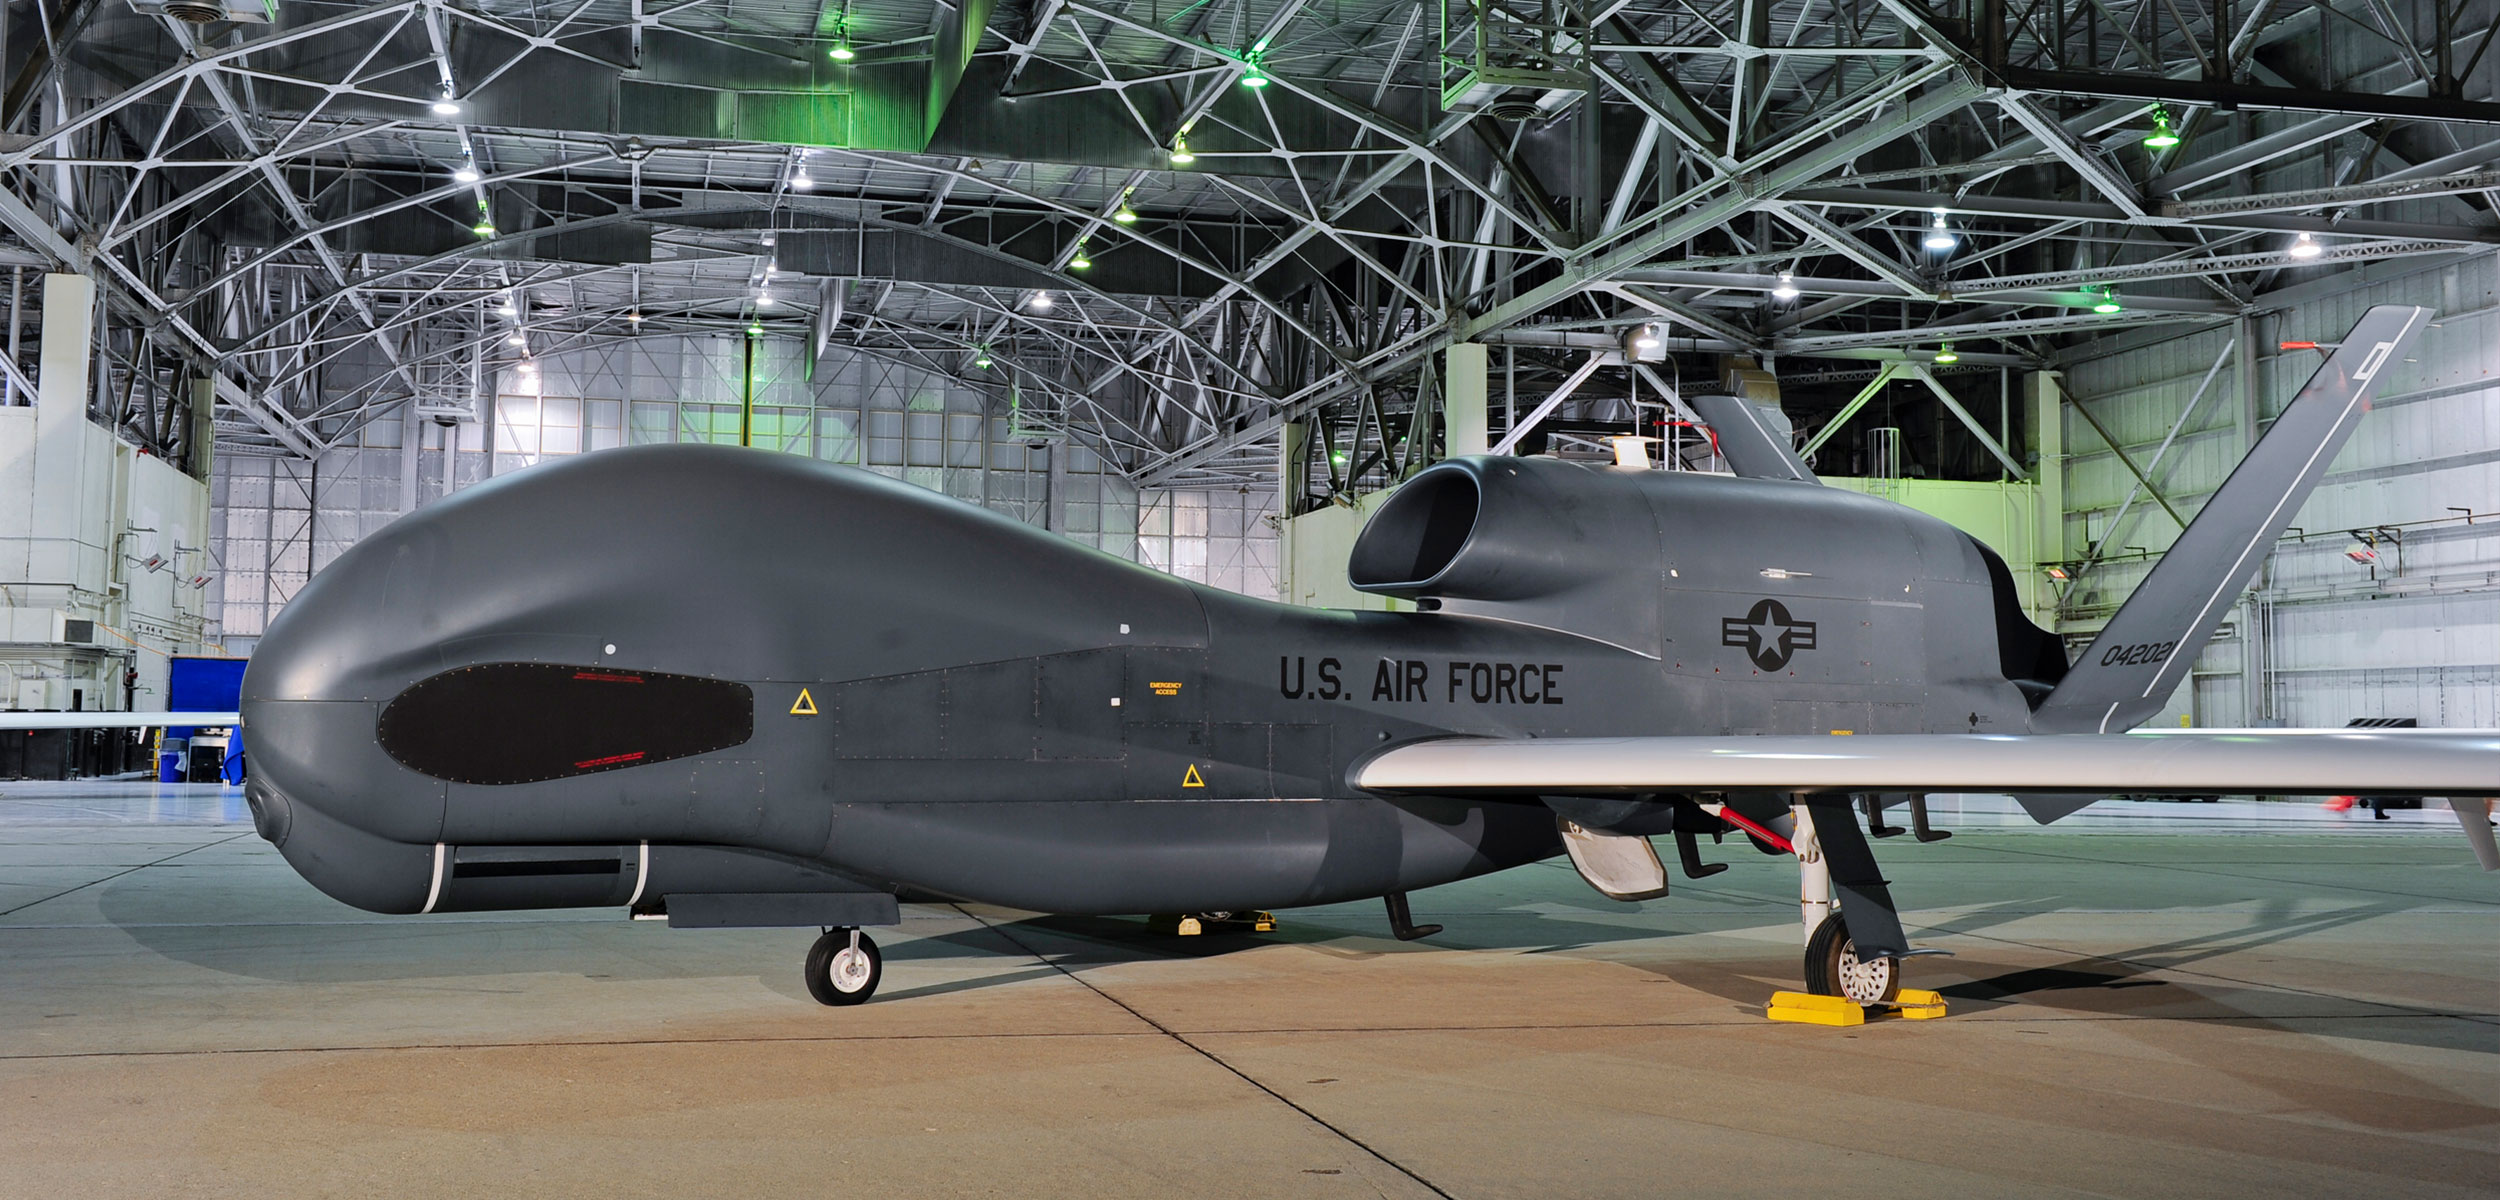 Global Hawk unmanned military surveillance aerial vehicle in hangar